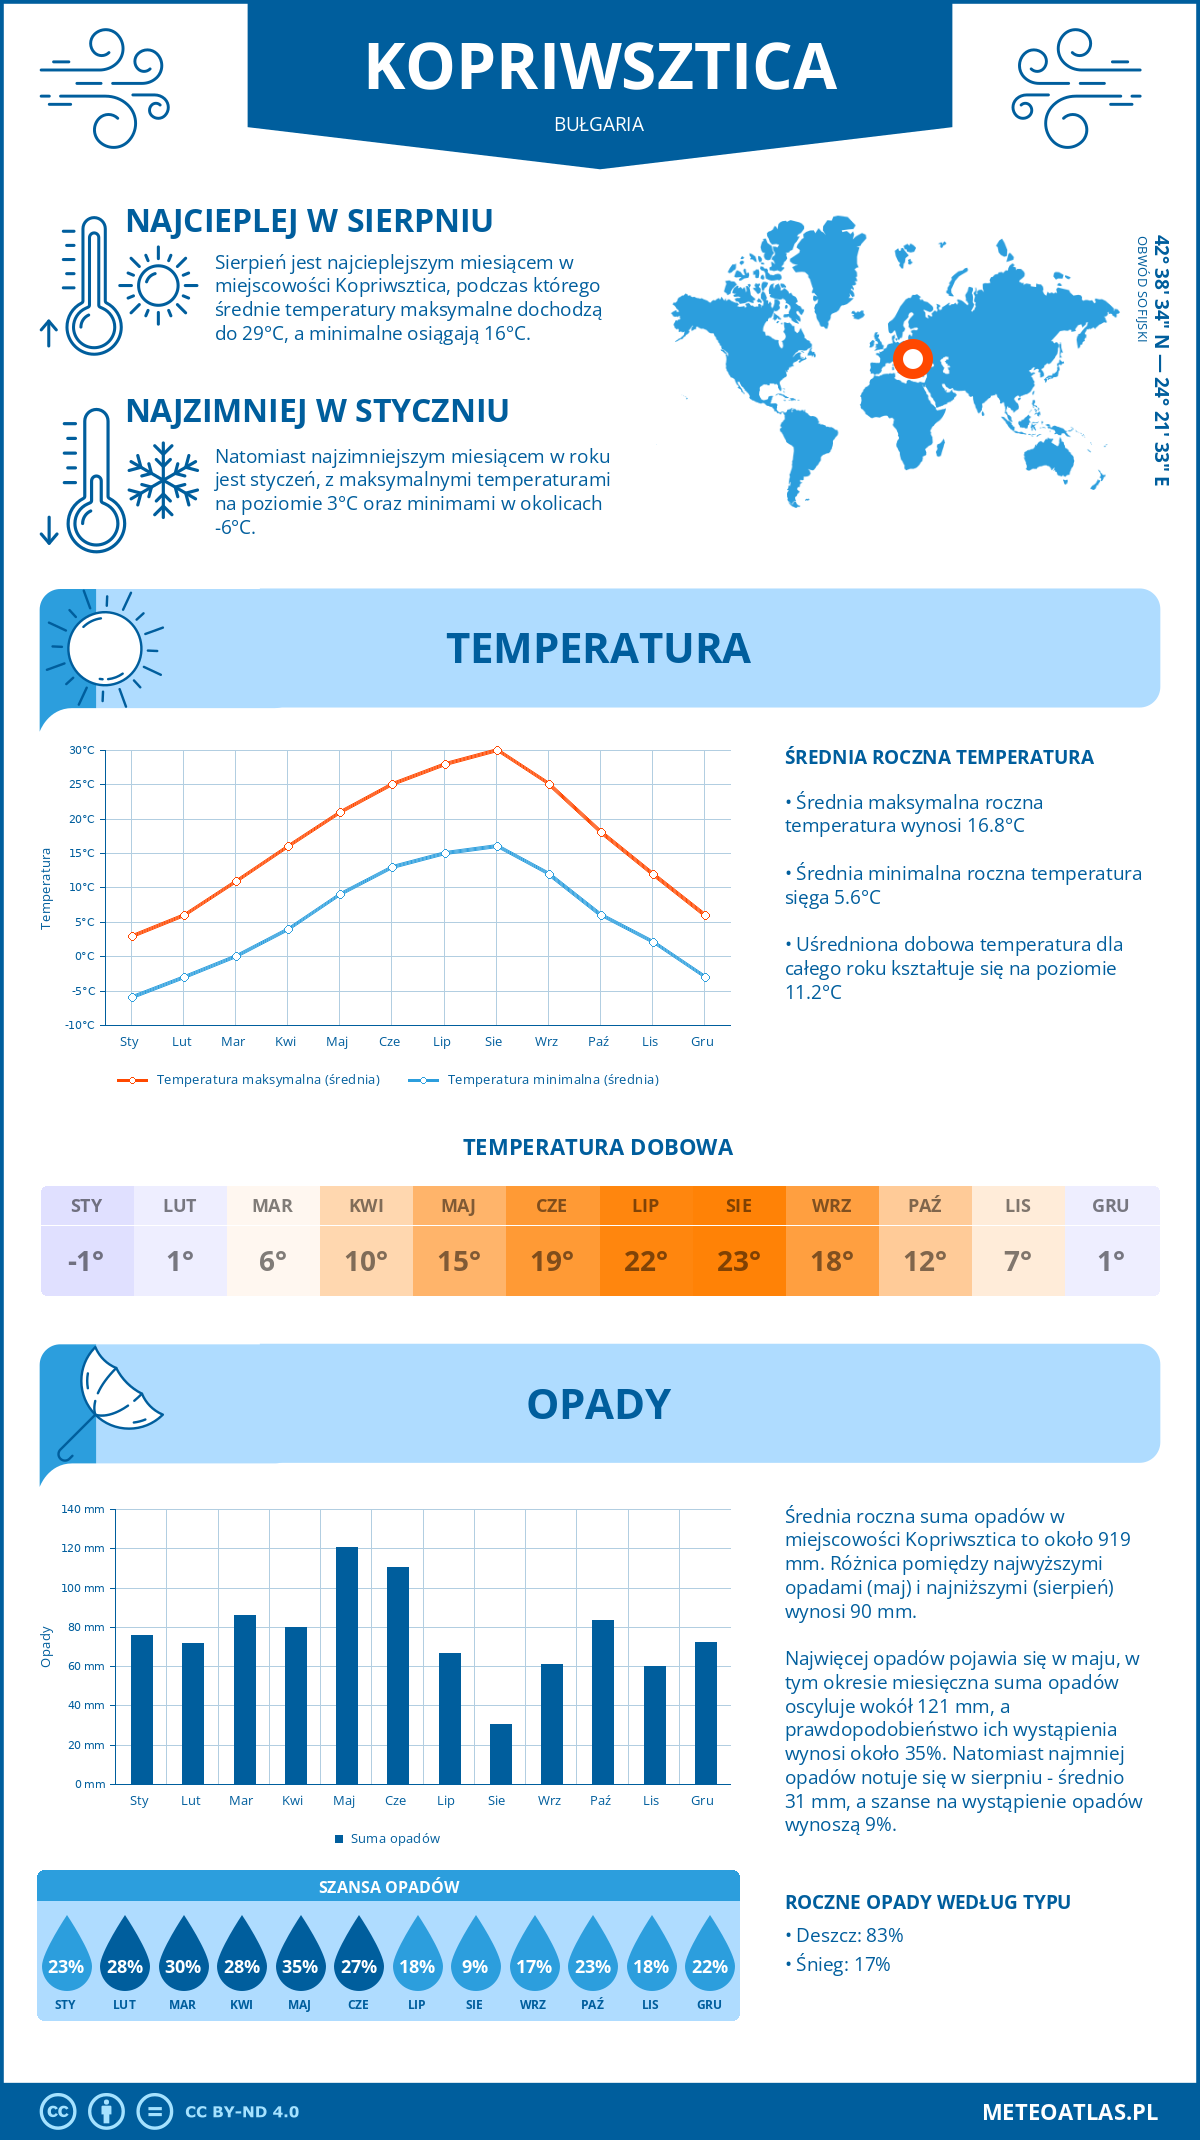 Pogoda Kopriwsztica (Bułgaria). Temperatura oraz opady.